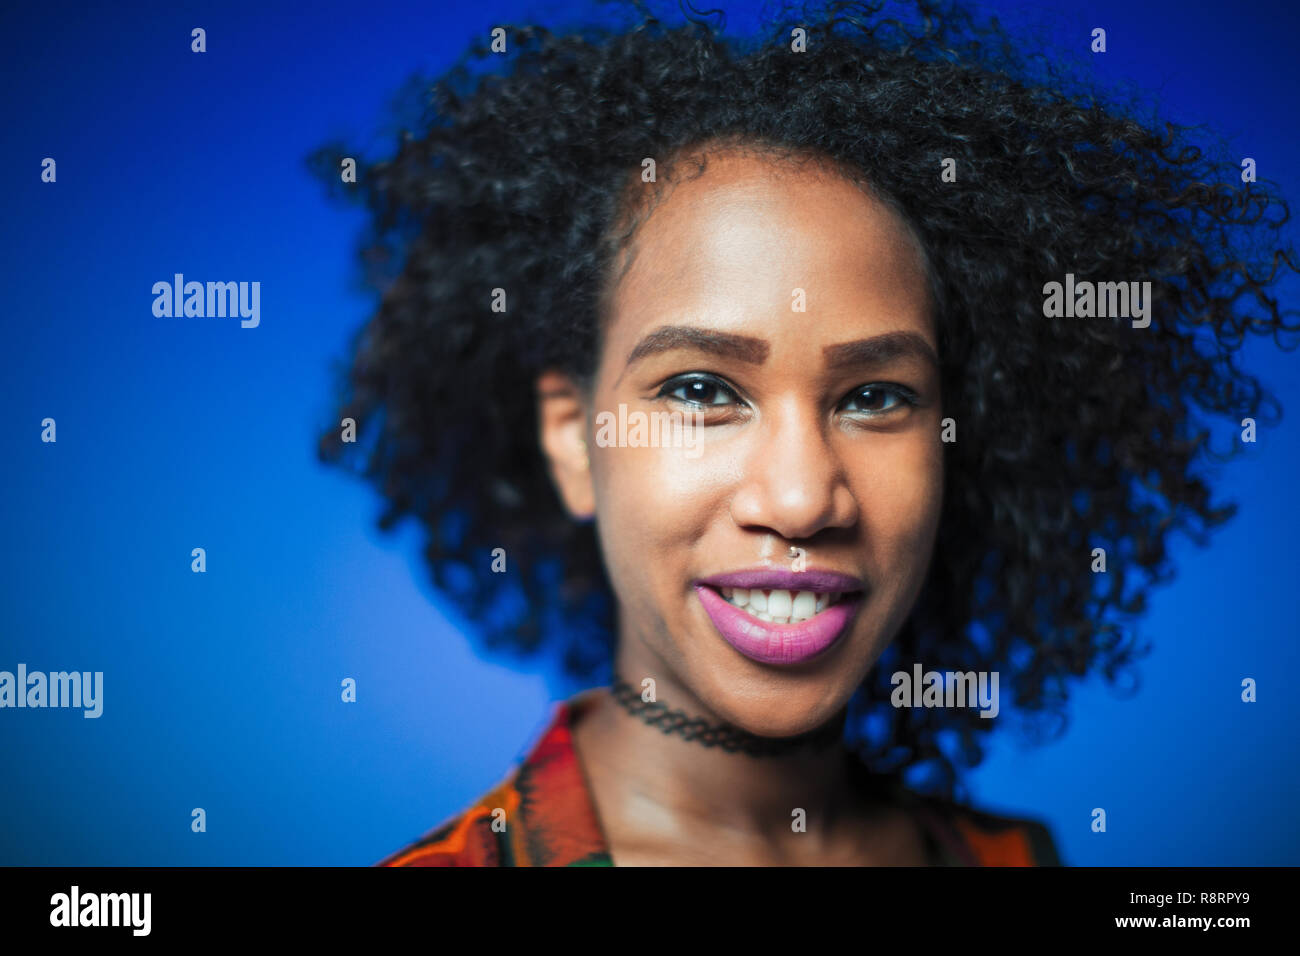 Portrait smiling, confident young woman Stock Photo